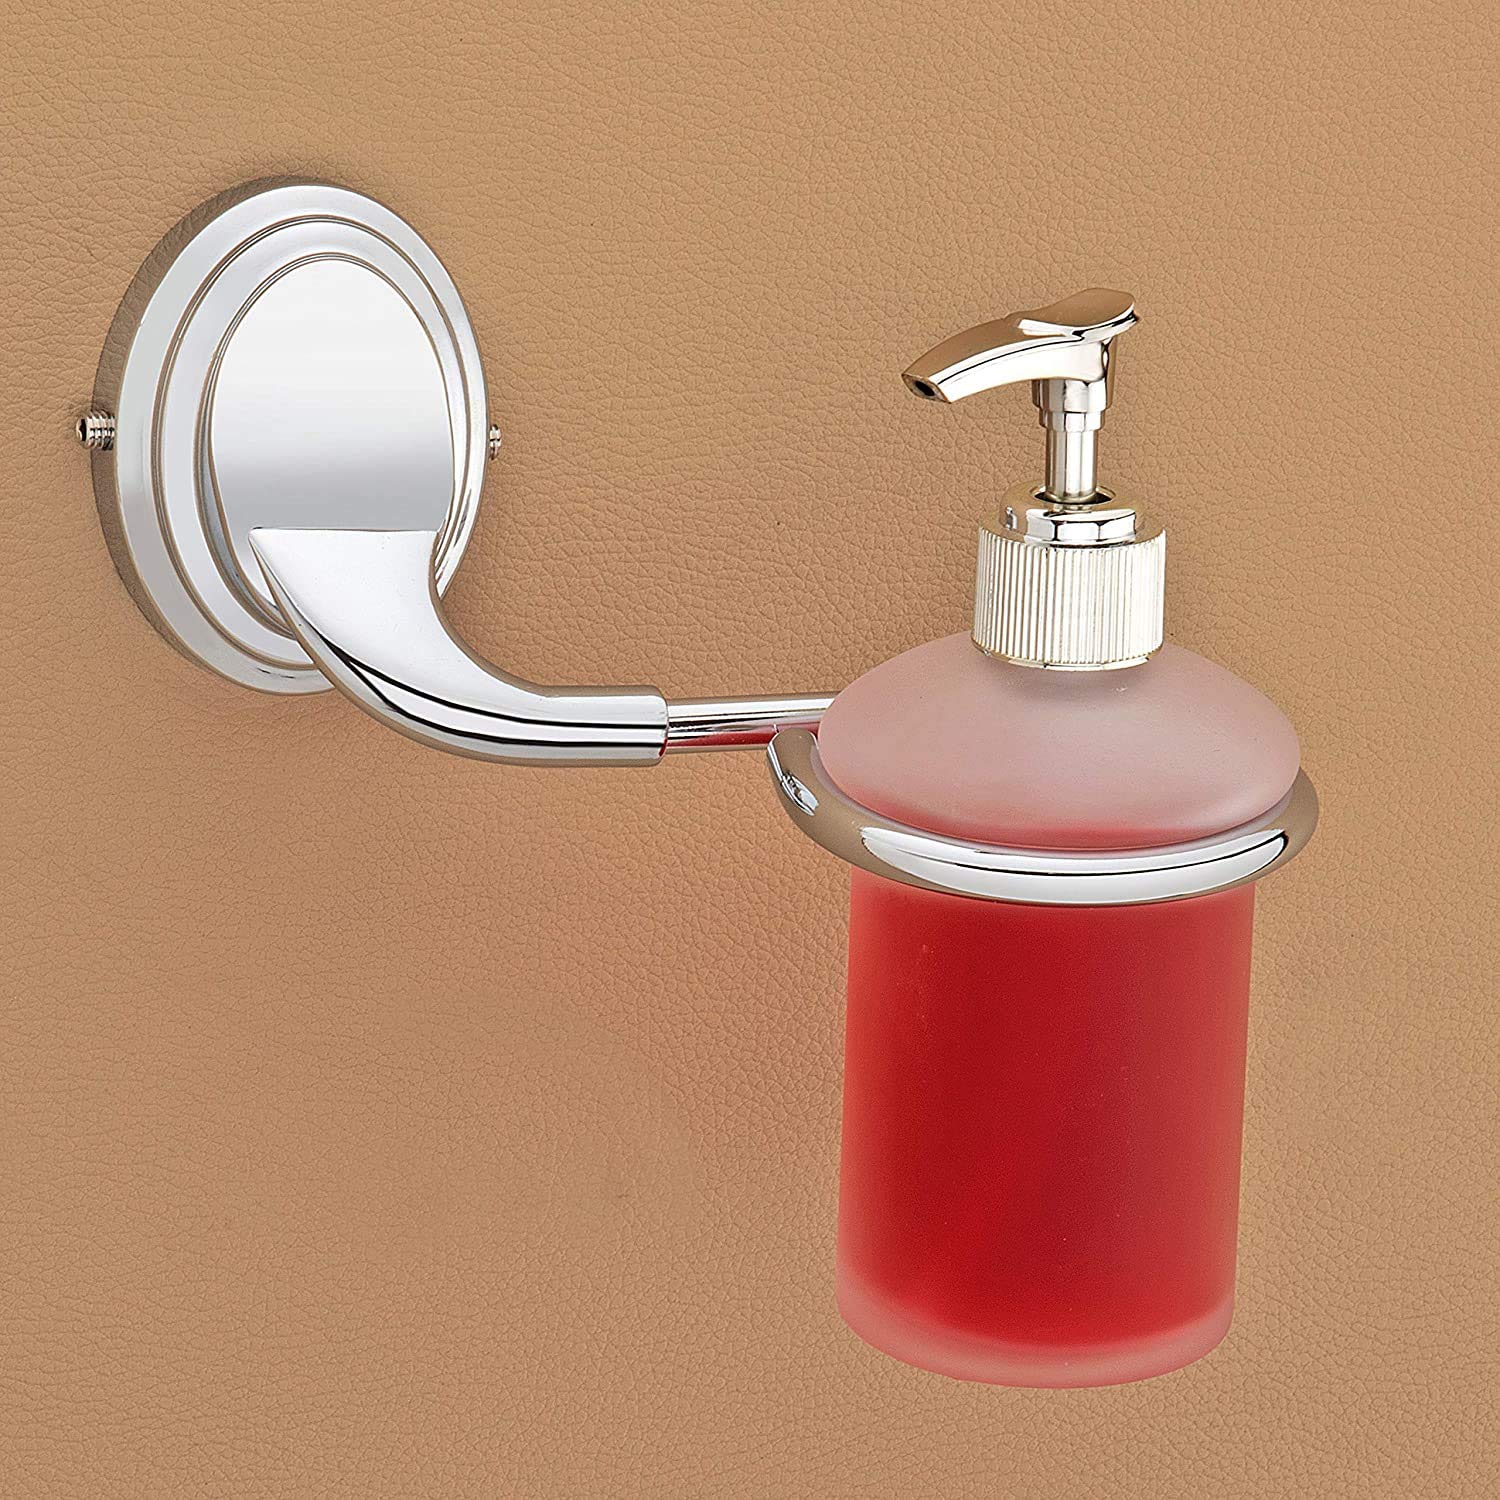 Plantex Stainless Steel 304 Grade Cubic Liquid Soap Dispenser/Shampoo Dispenser/Hand Wash Dispenser/Bathroom Accessories(Chrome) - Pack of 3